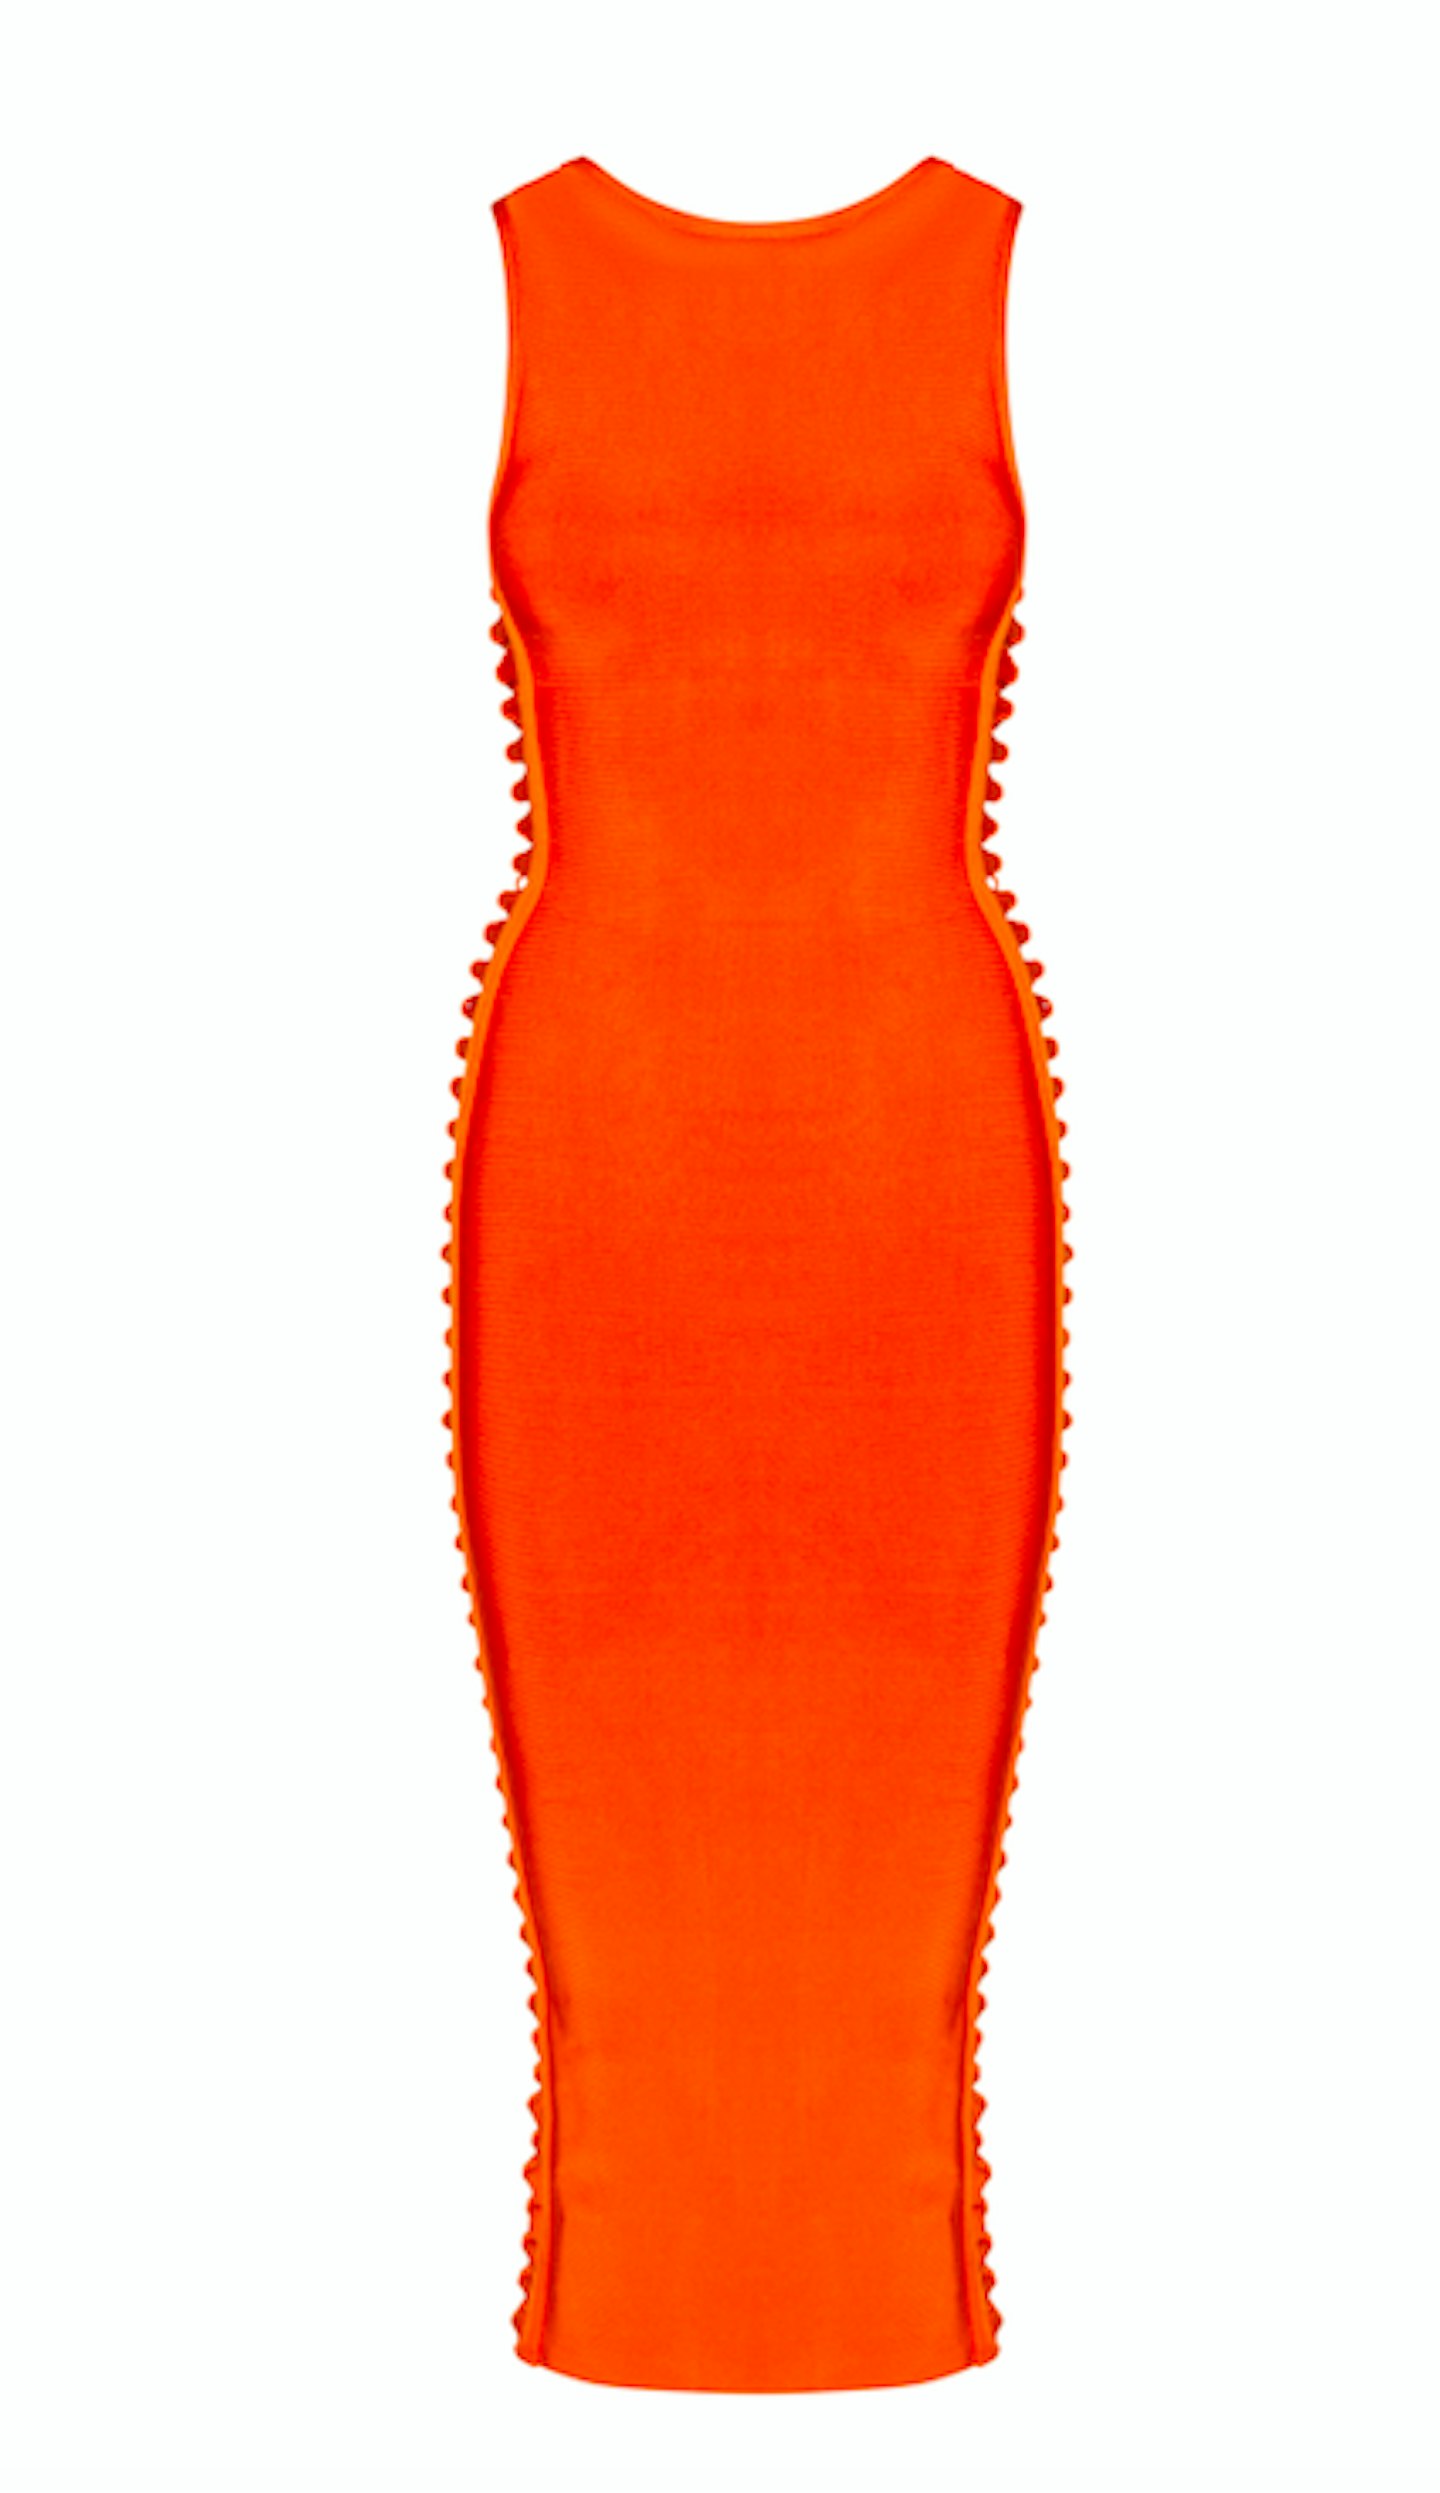 House of CB, Orange Dress